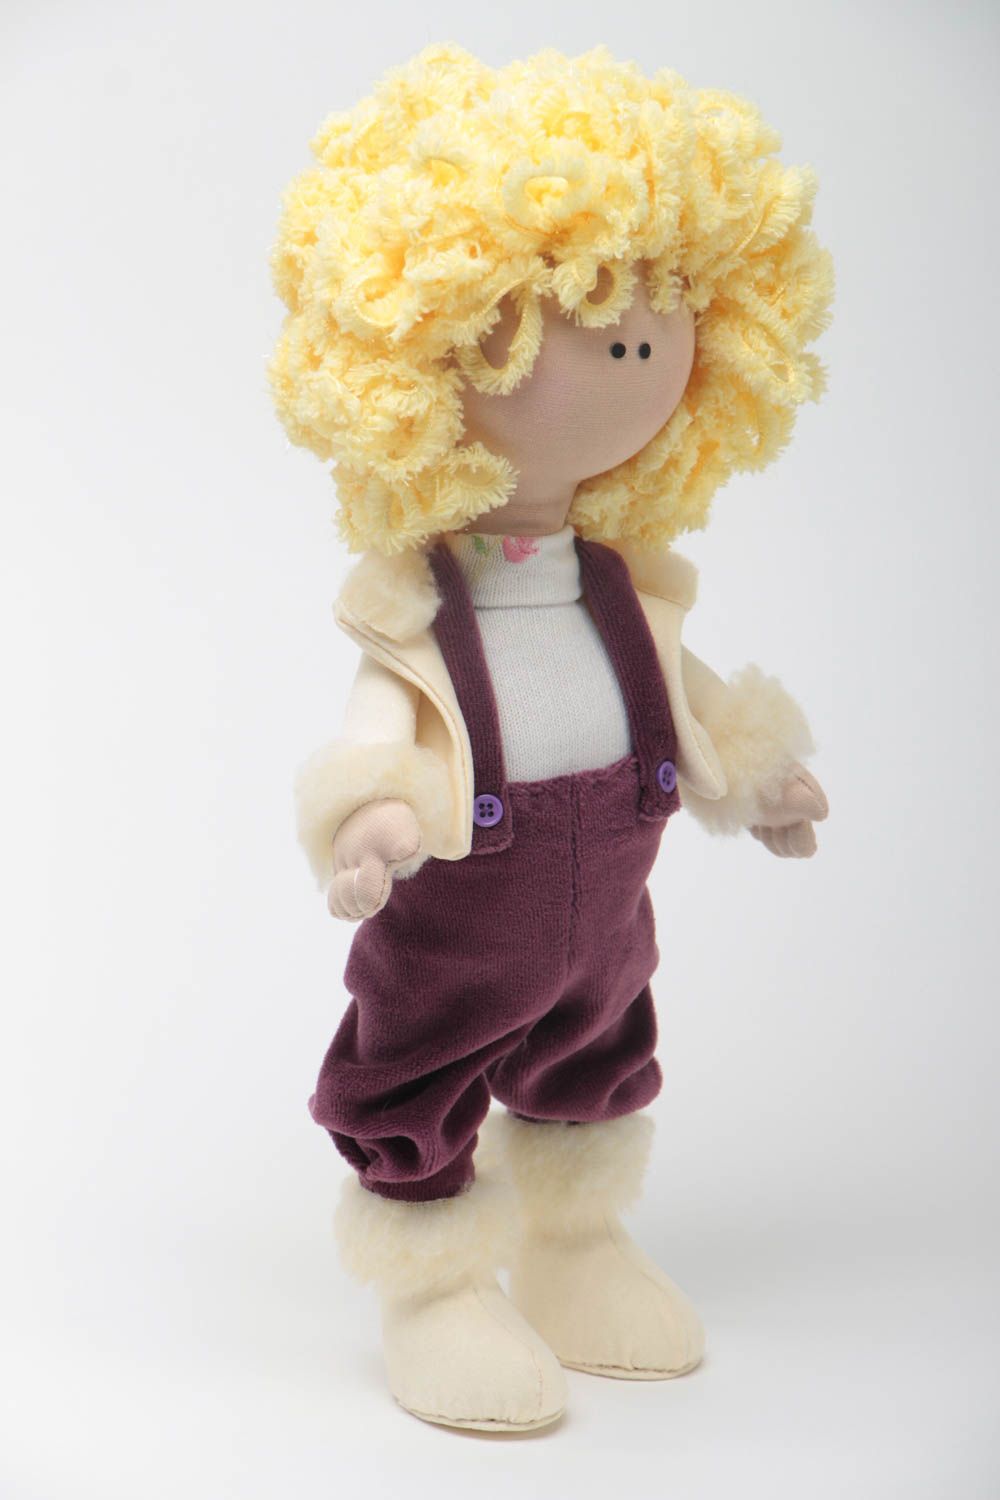 Handmade childrens rag doll textile stuffed toy interior decorating gift ideas photo 2